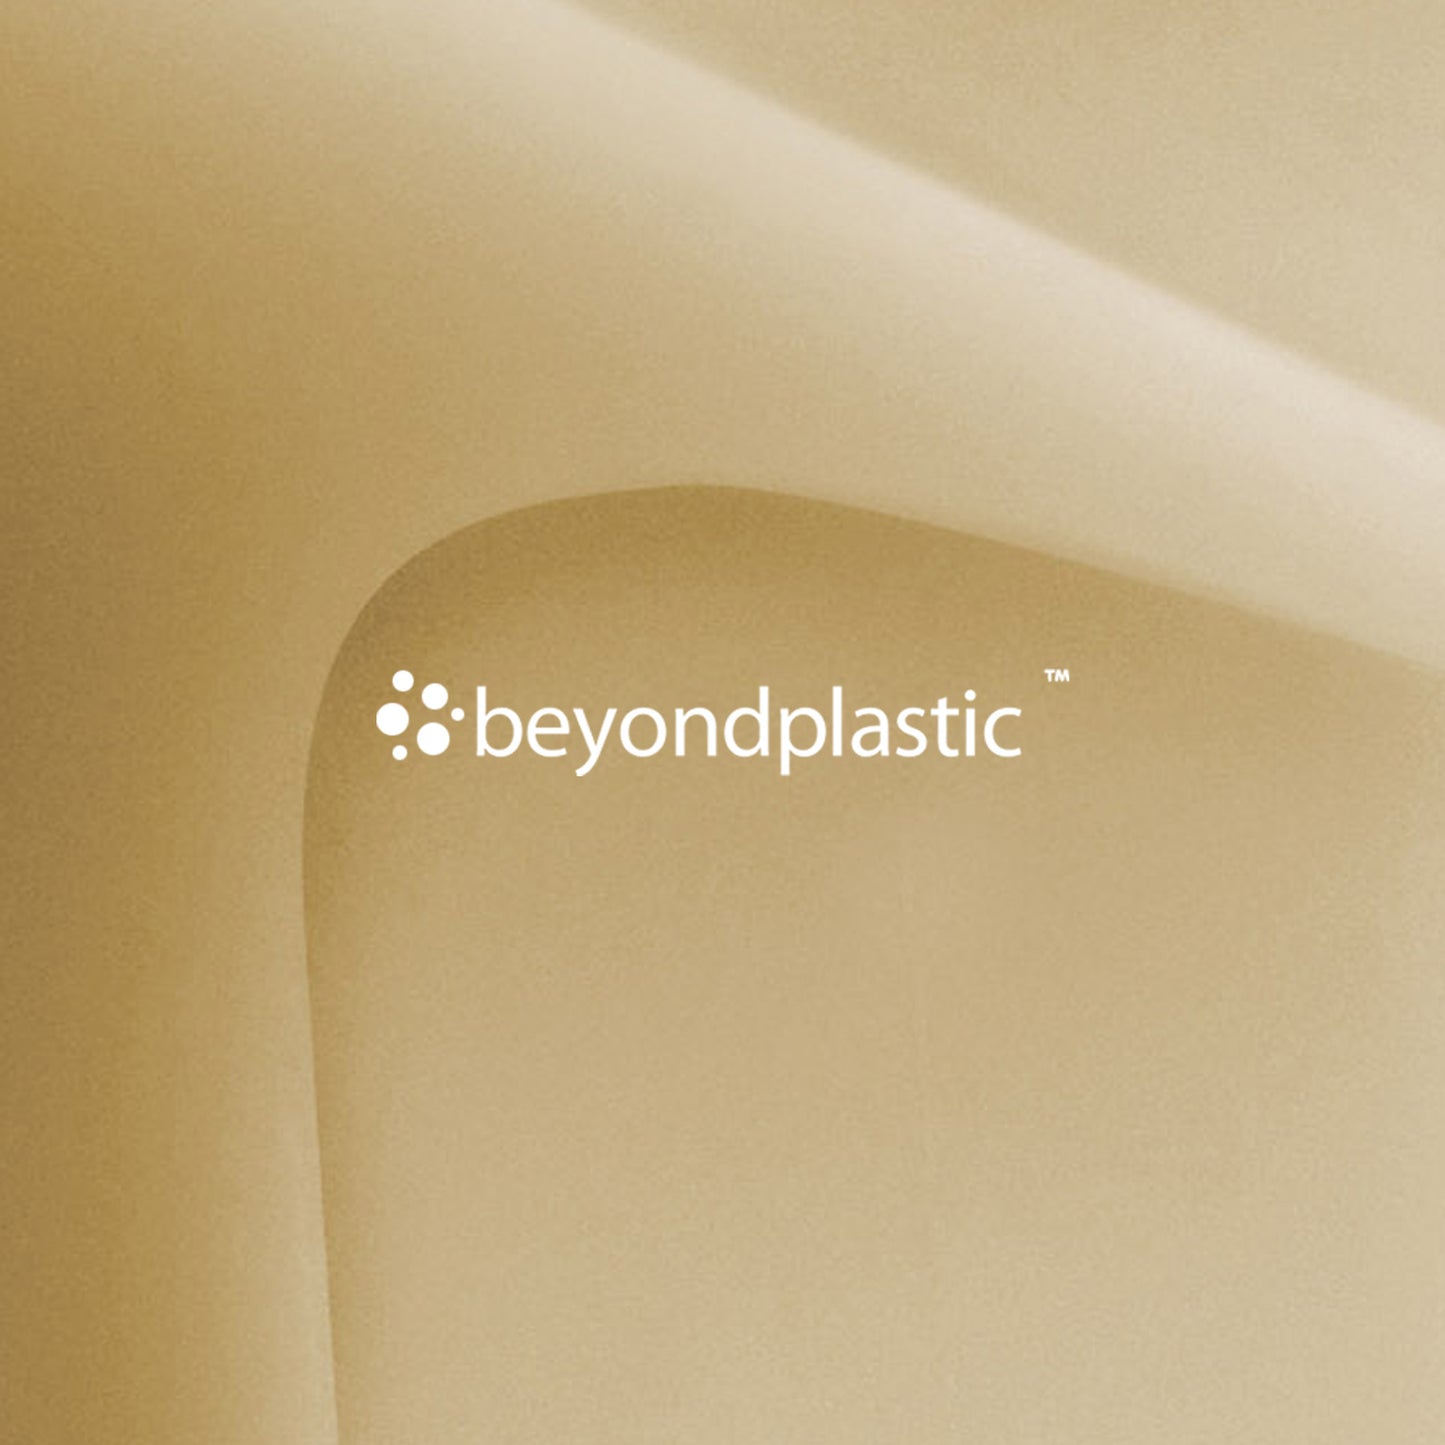 ACBC launches BeyondPlastic™ 100% bio-based plastic solutions.